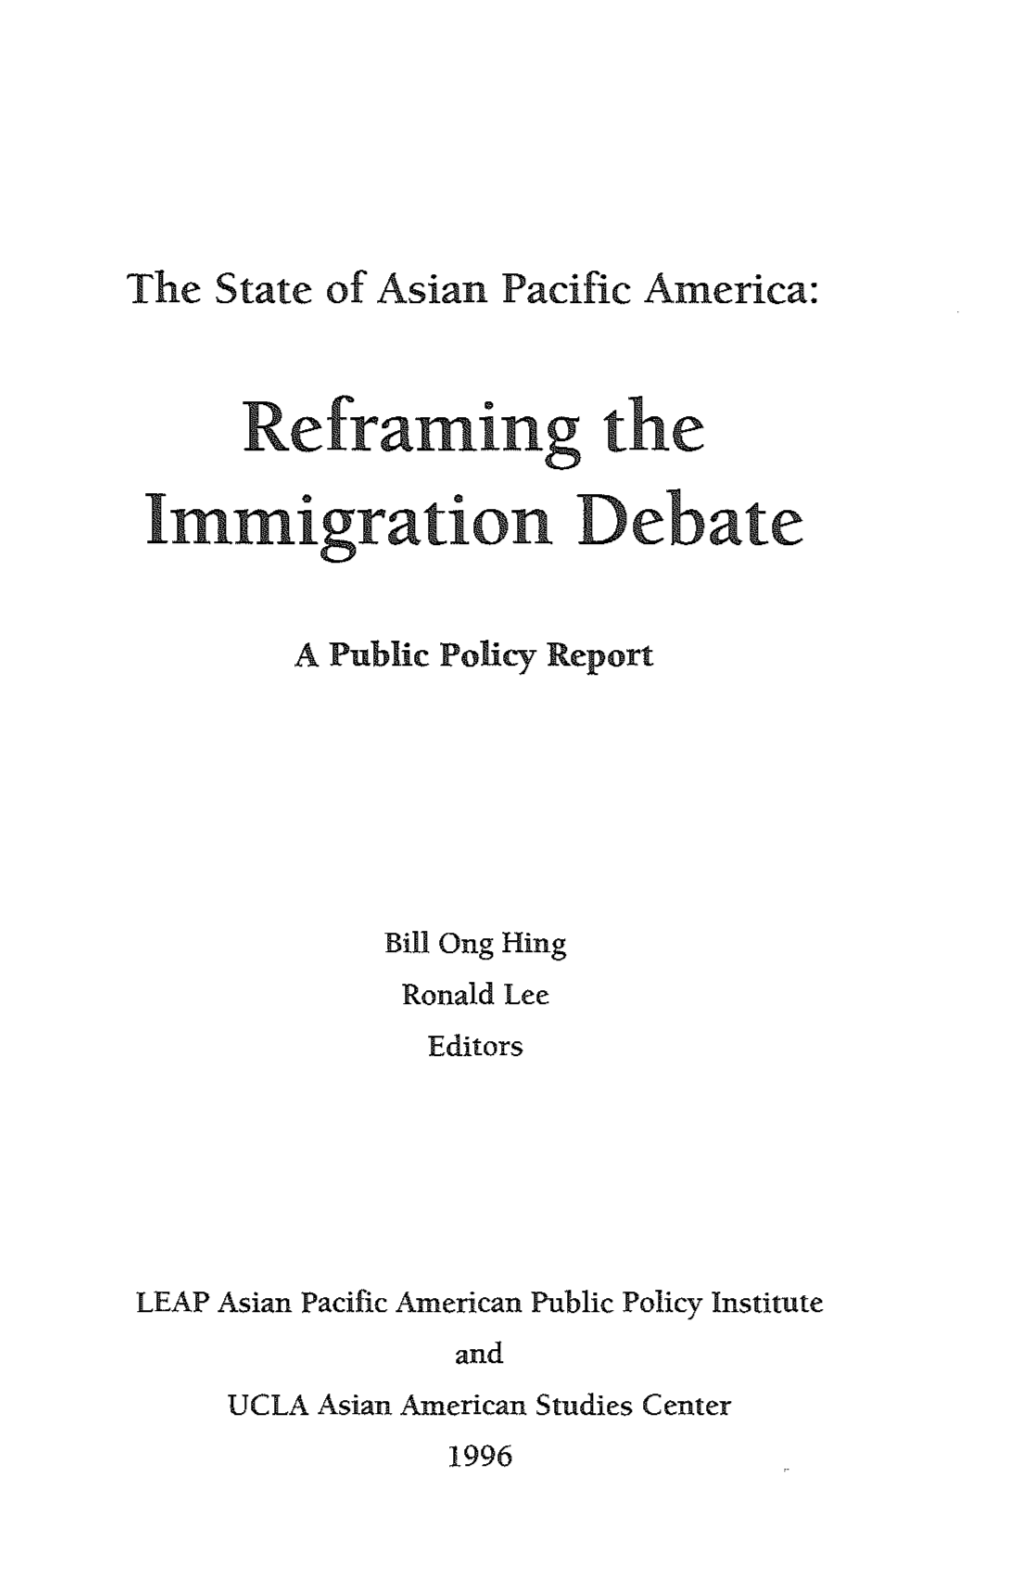 Reframing the Immigration Debate